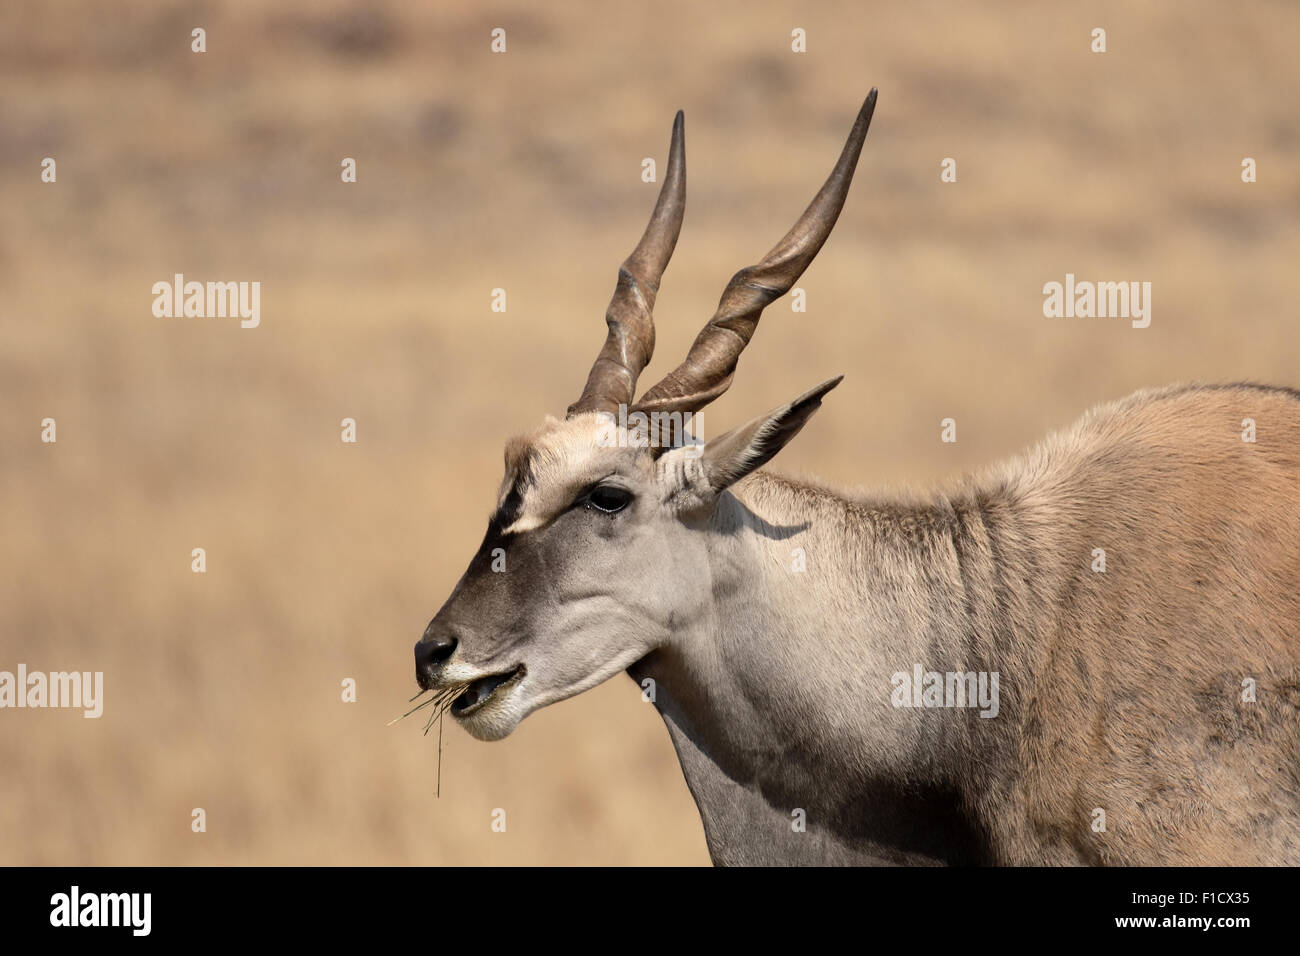 Eland, Taurotragus oryx, single mammal head shot, South Africa, August 2015 Stock Photo